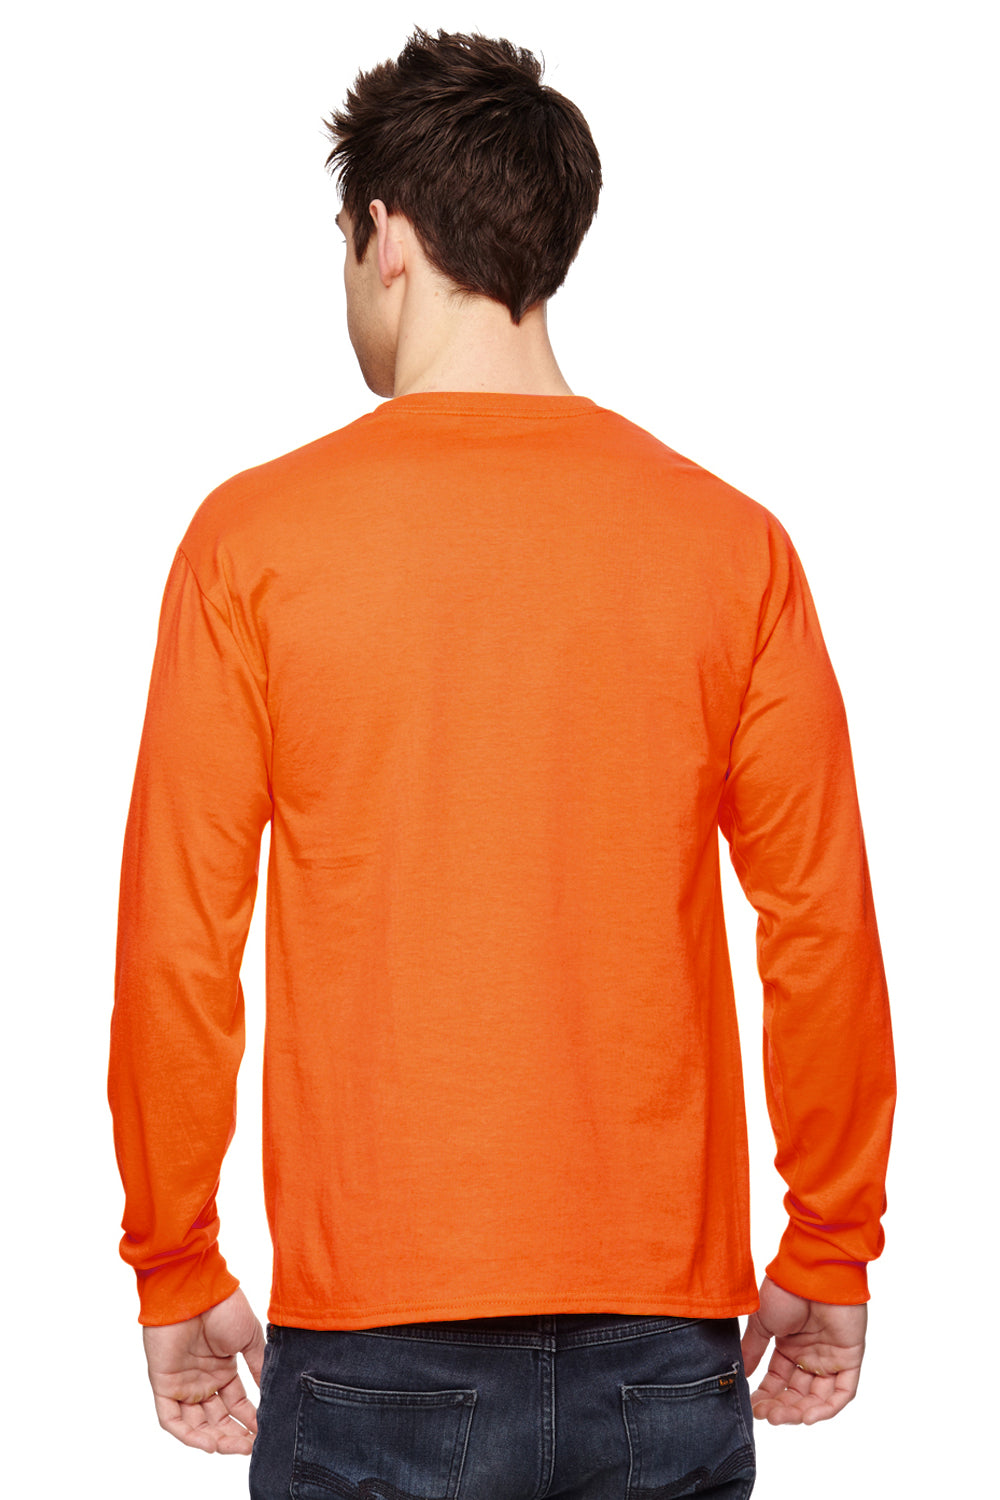 Fruit Of The Loom 4930 Mens HD Jersey Long Sleeve Crewneck T-Shirt Safety Orange Back